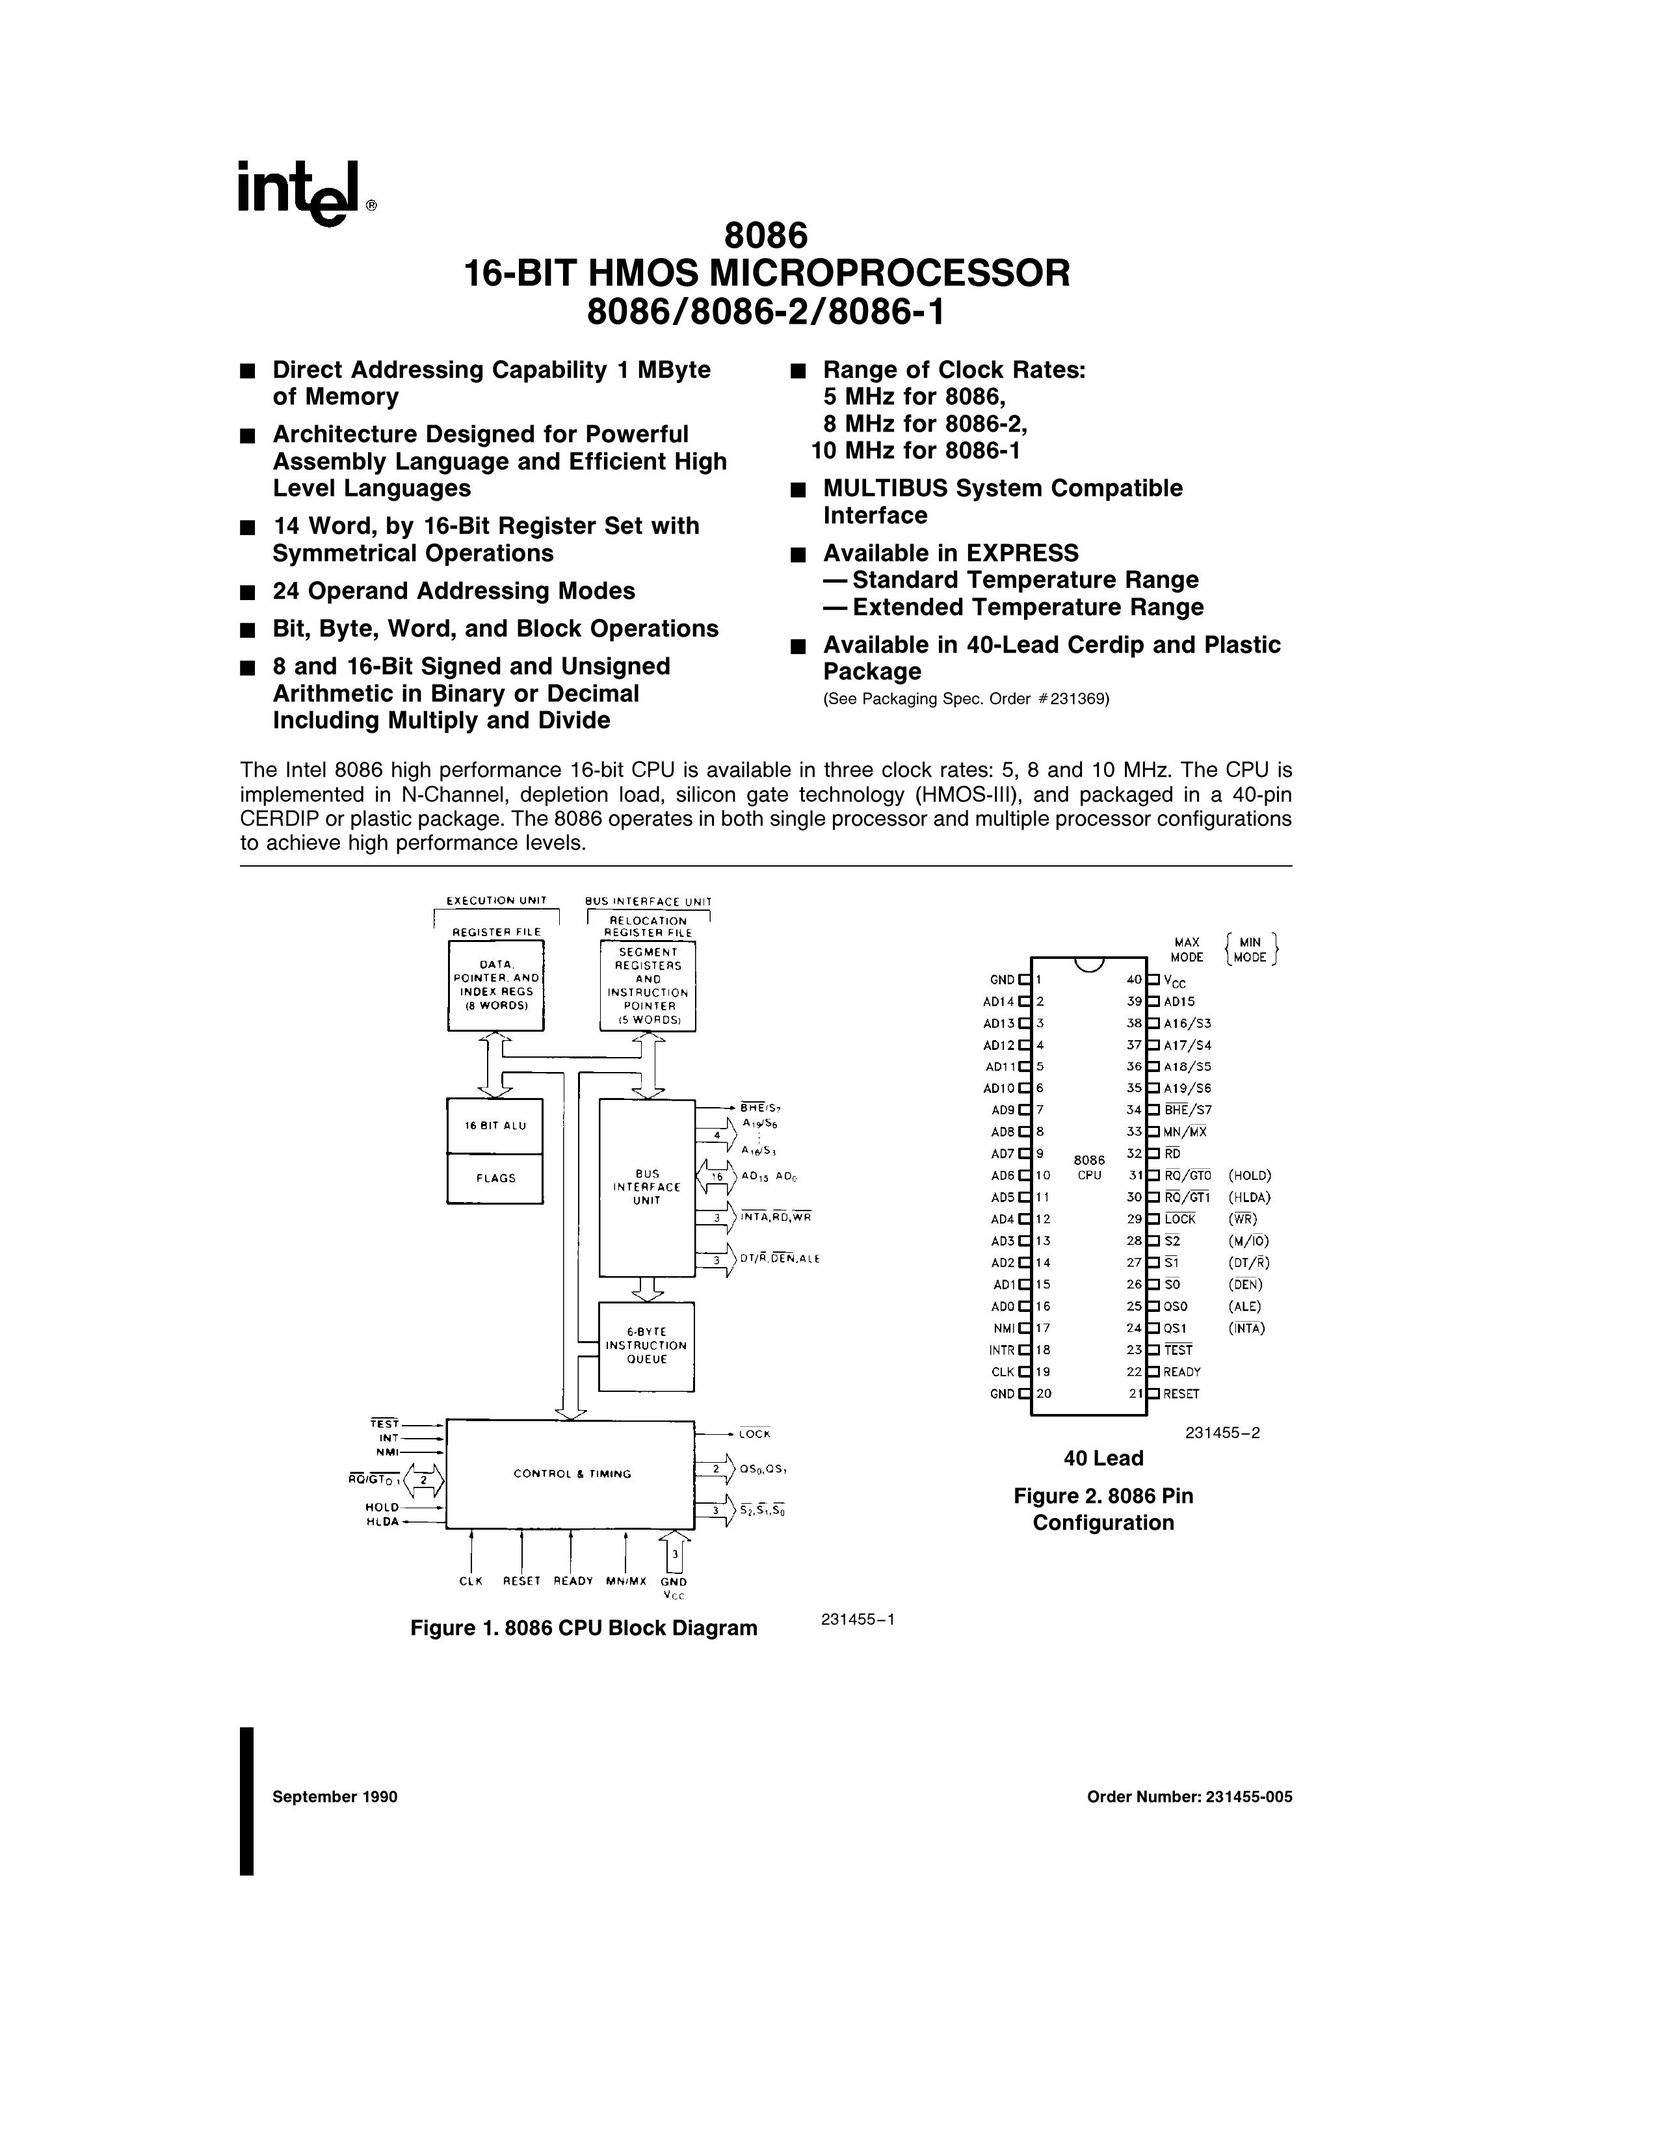 Intel 8086-1 Computer Hardware User Manual